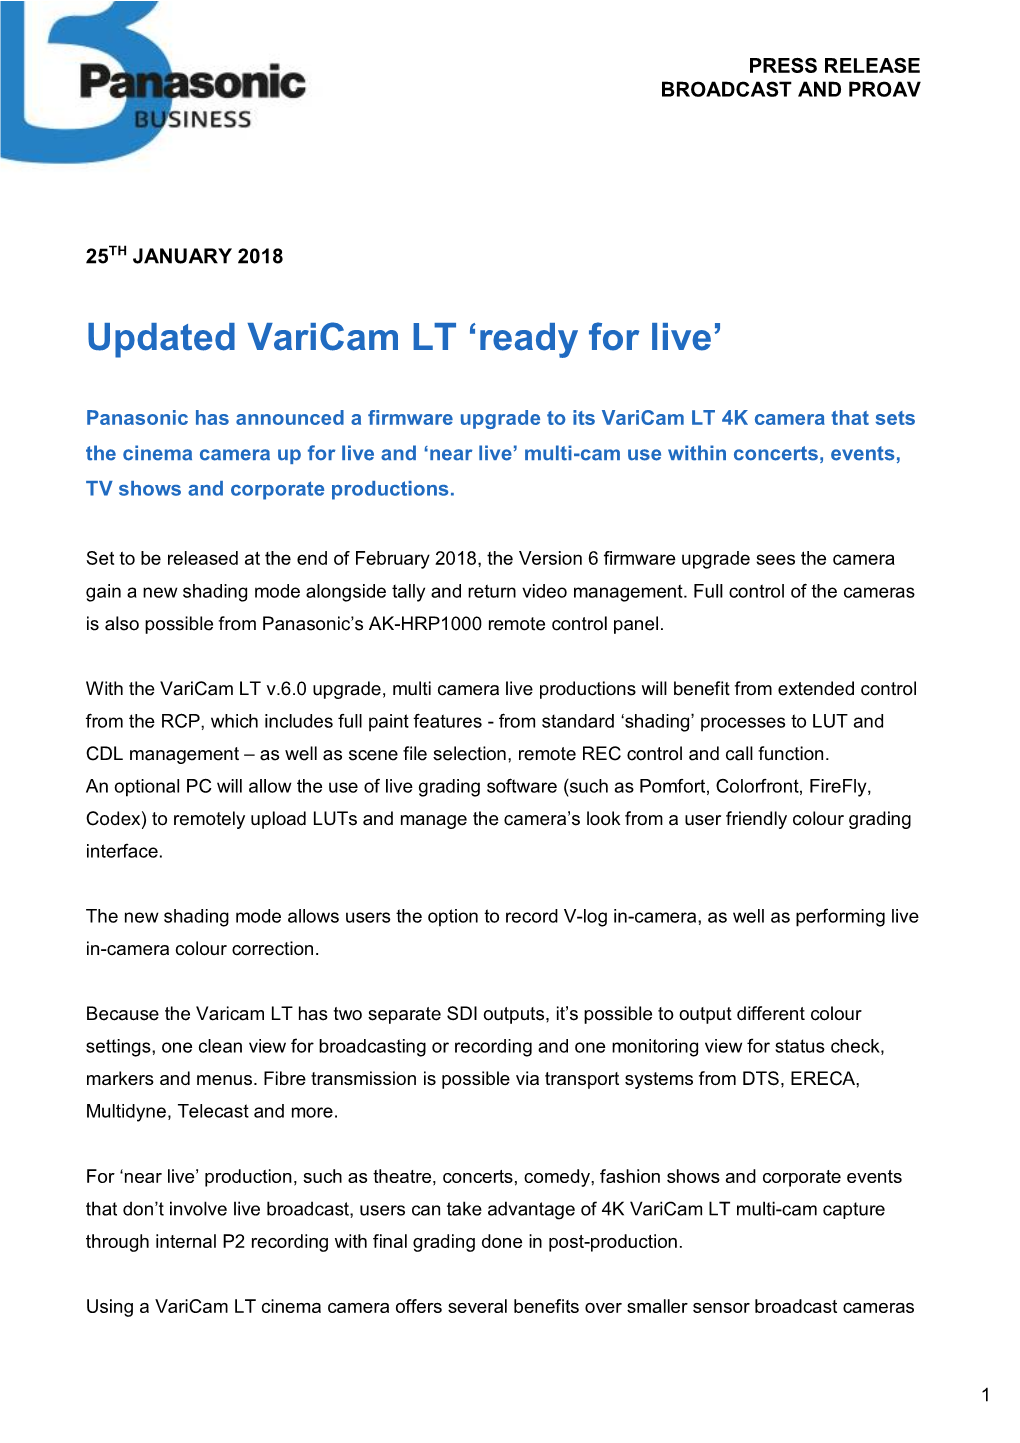 Updated Varicam LT 'Ready for Live'